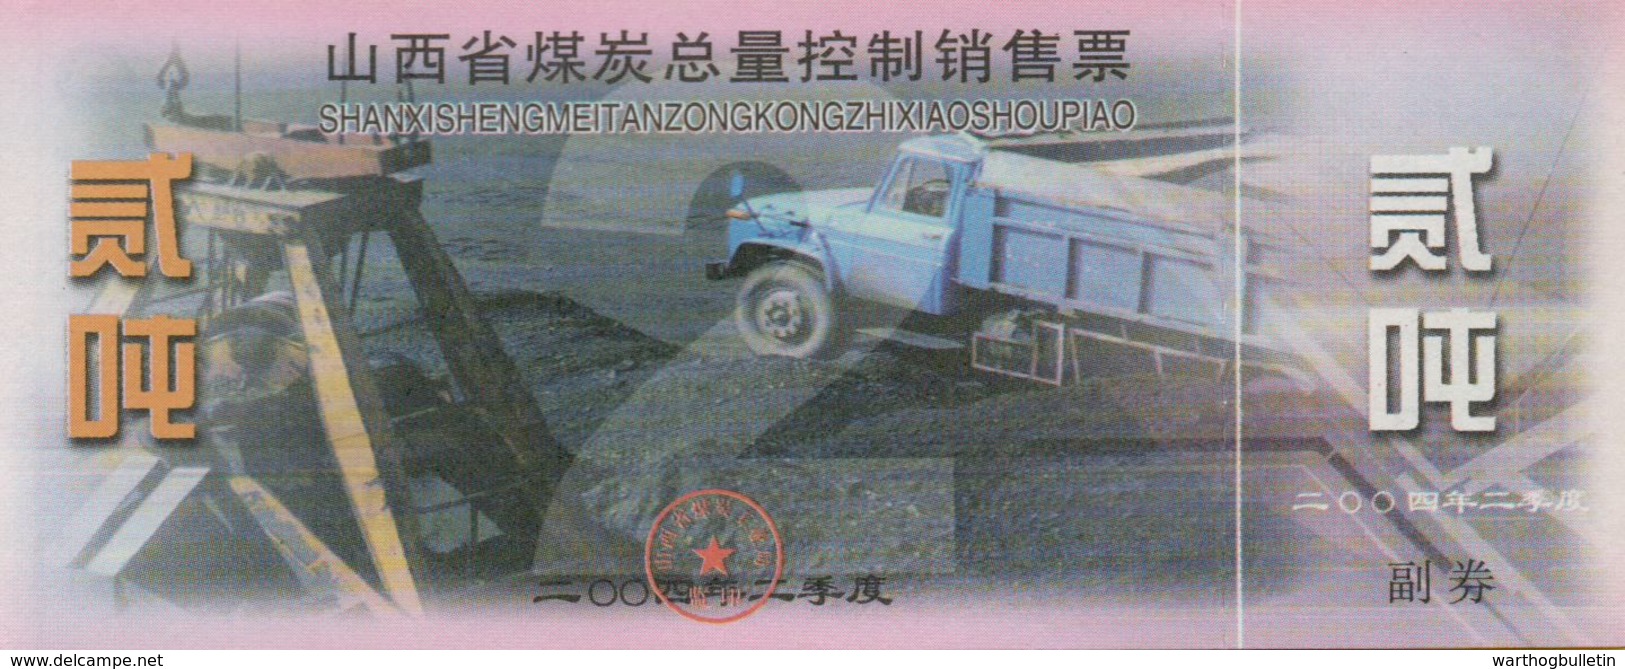 2004 Shanxi Province 2 Tons Coal Ration - China